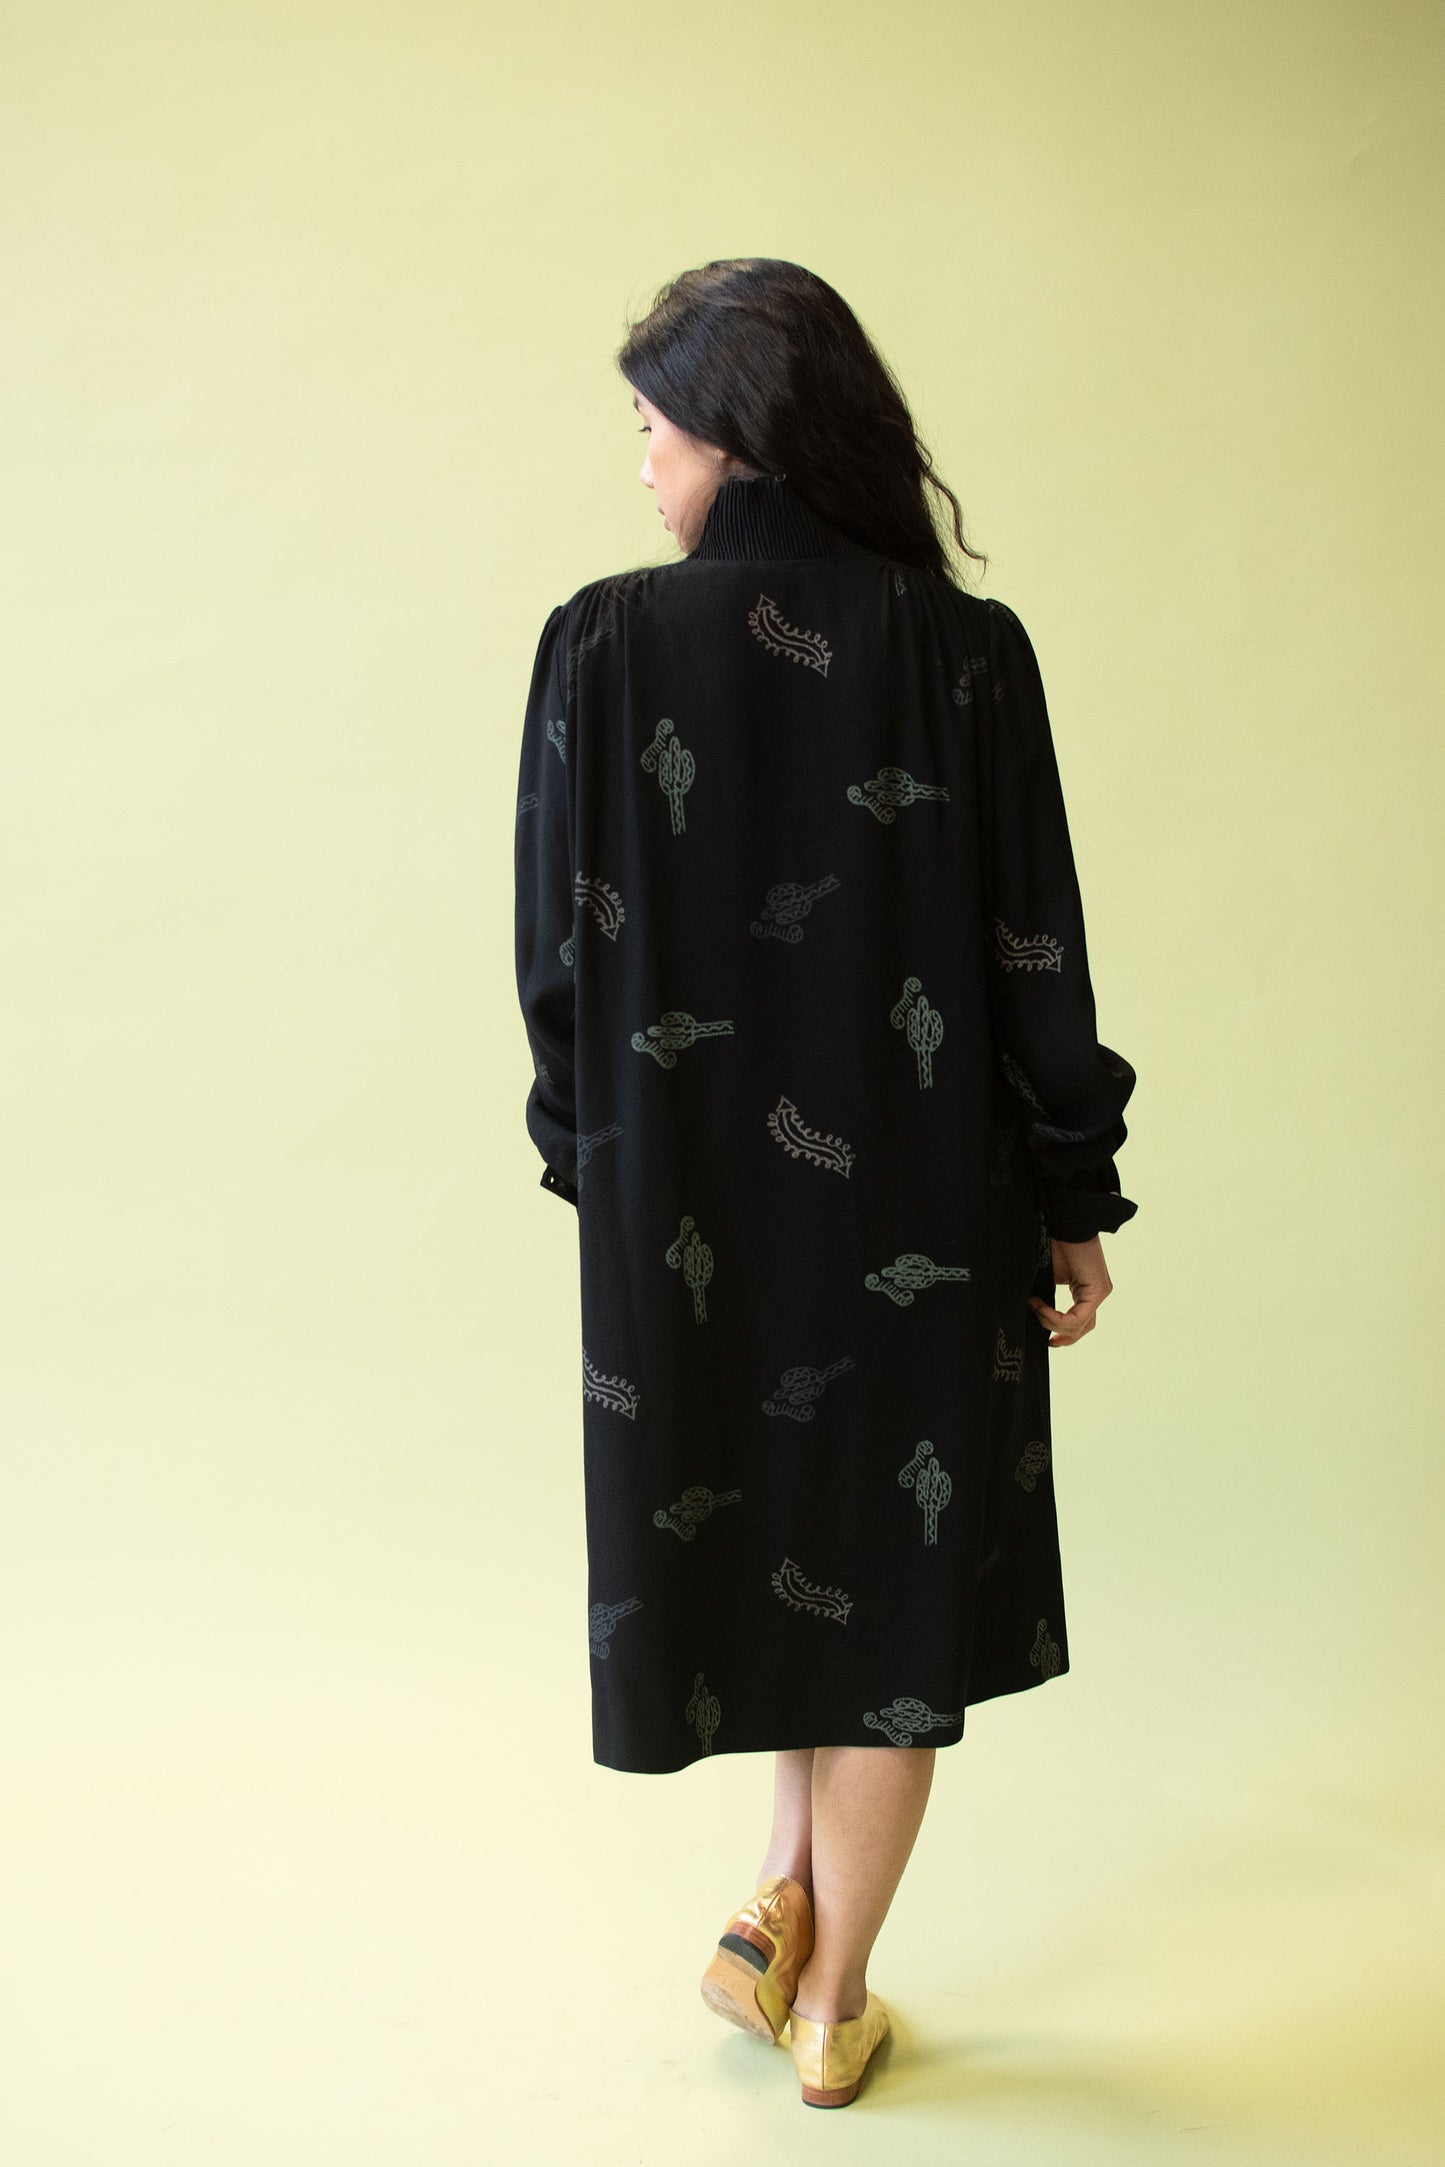 Cactus Print Dress | Zandra Rhodes